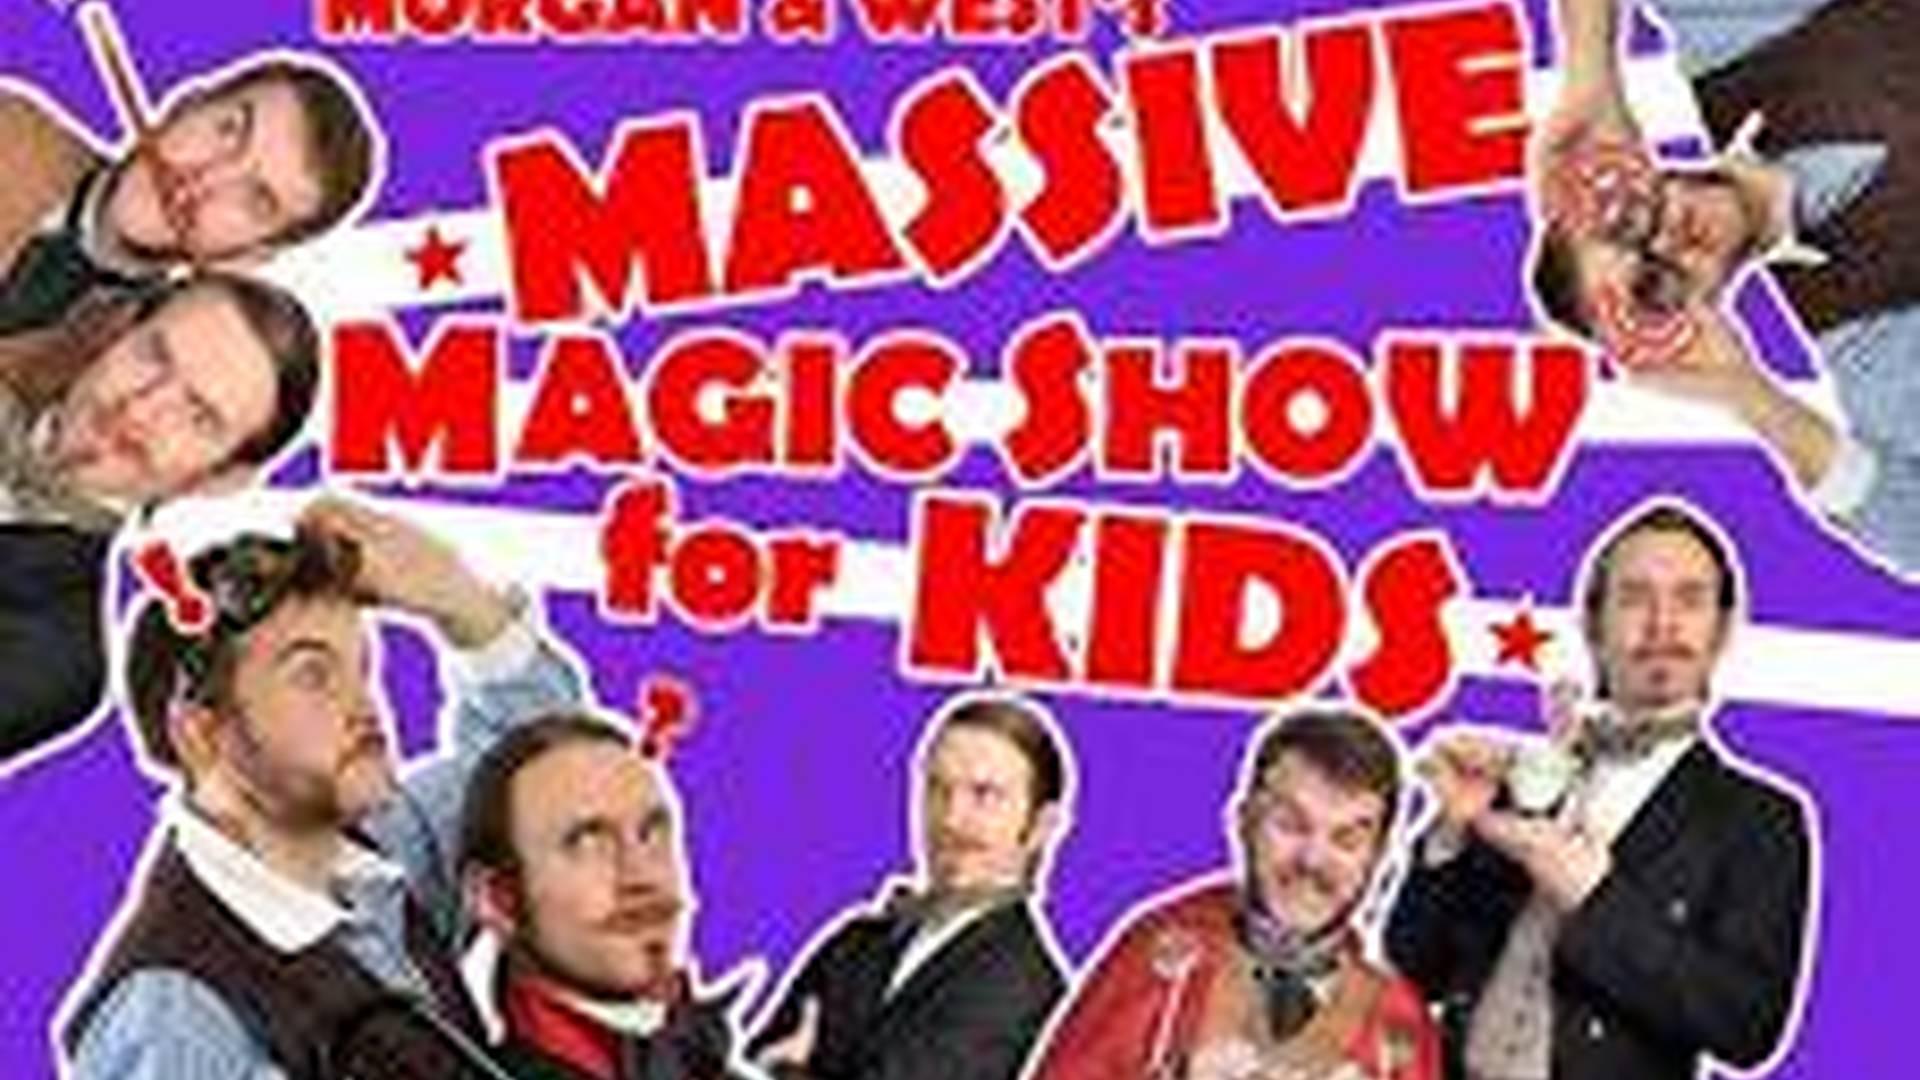 MORGAN & WEST’S MASSIVE MAGIC SHOW FOR KIDS! photo